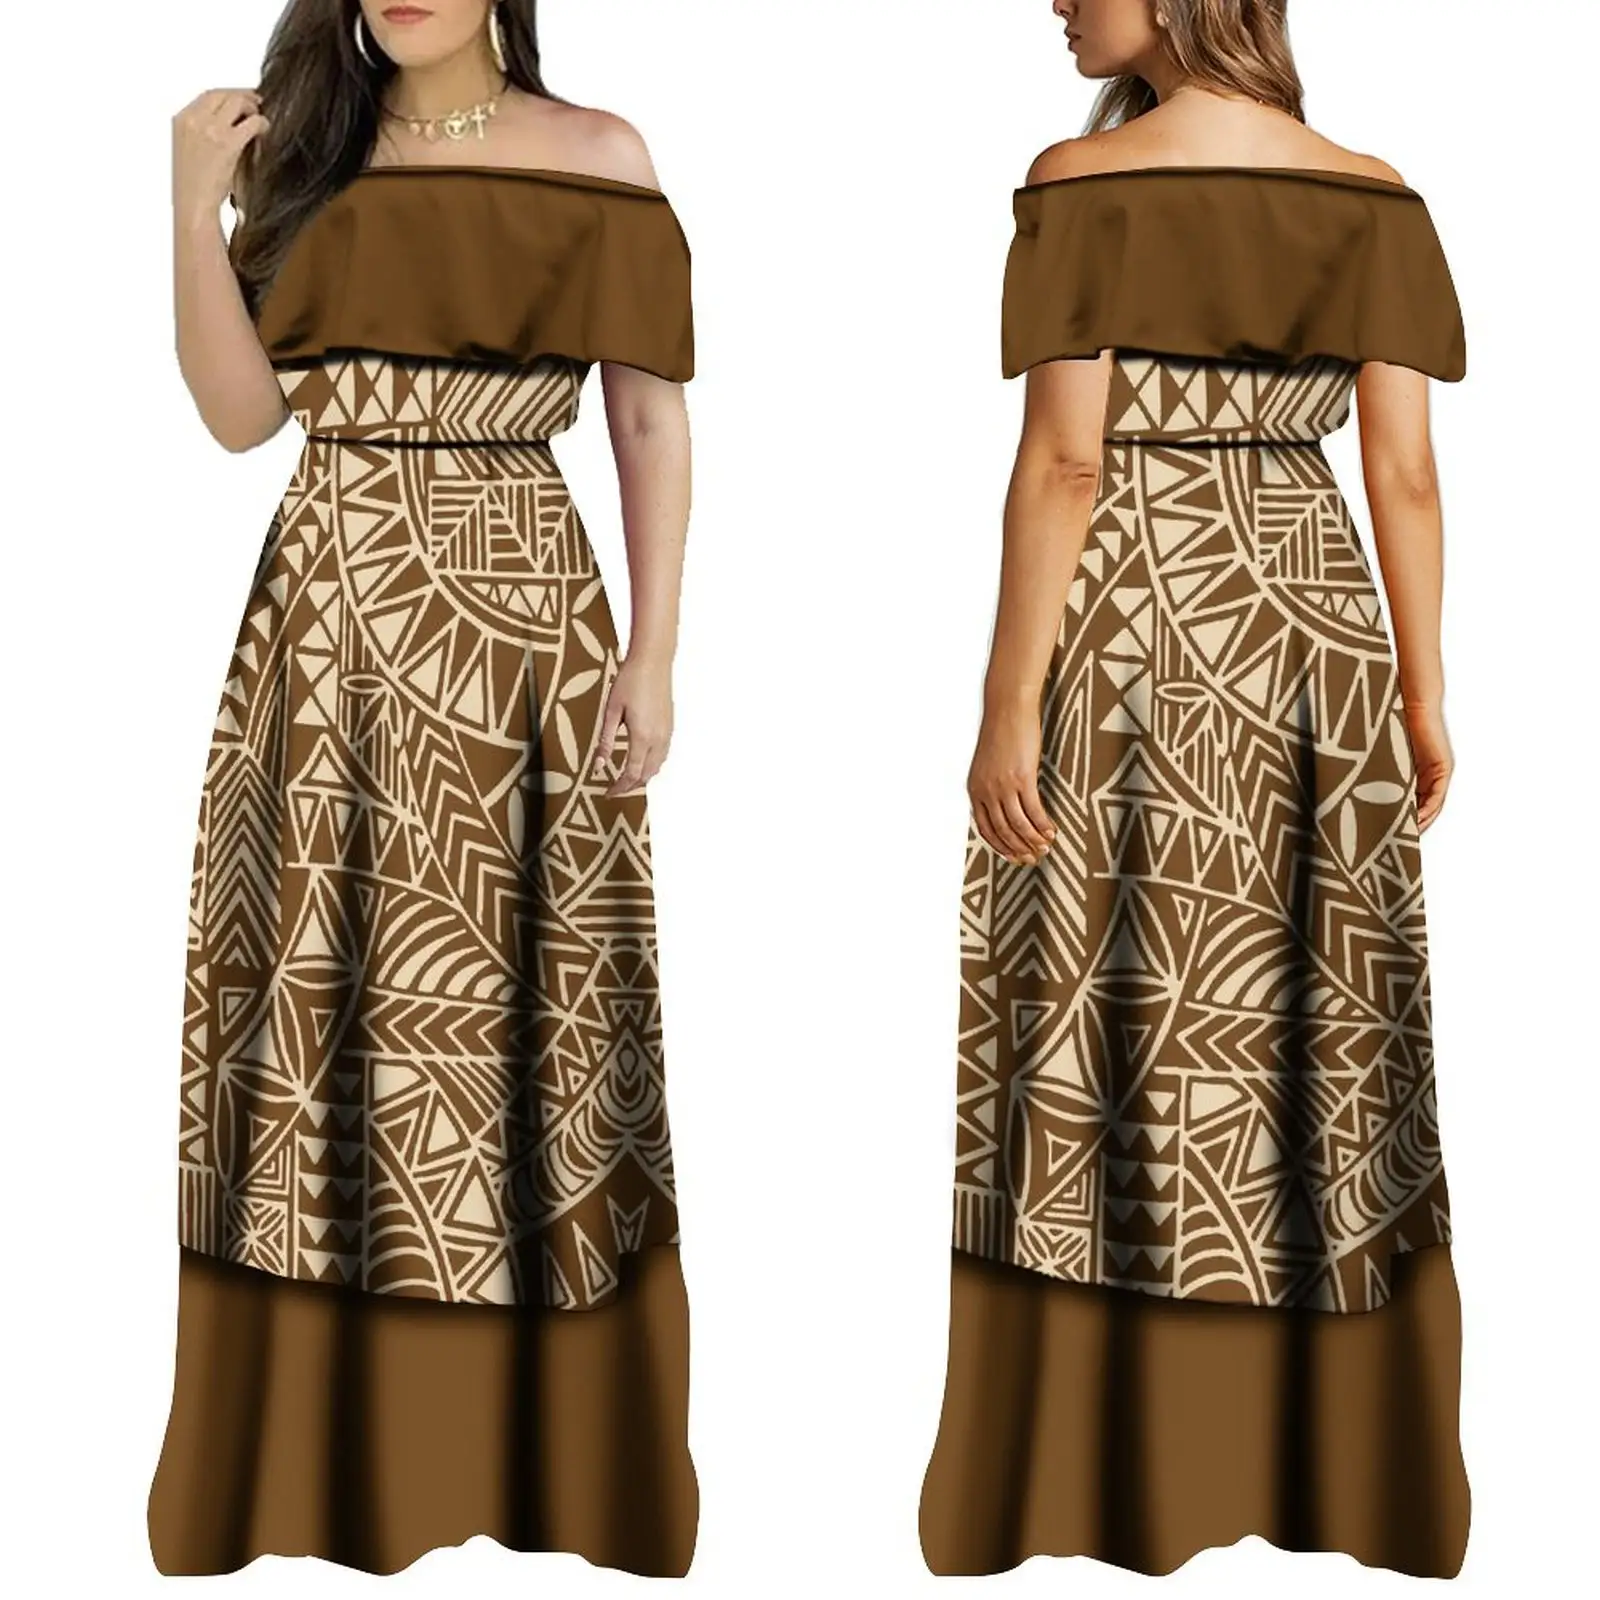 Syal kustom kualitas tinggi gaun Hawaii bahu terbuka gaun wanita motif Tribal Polinesia coklat gaun berjenjang Maxi panjang